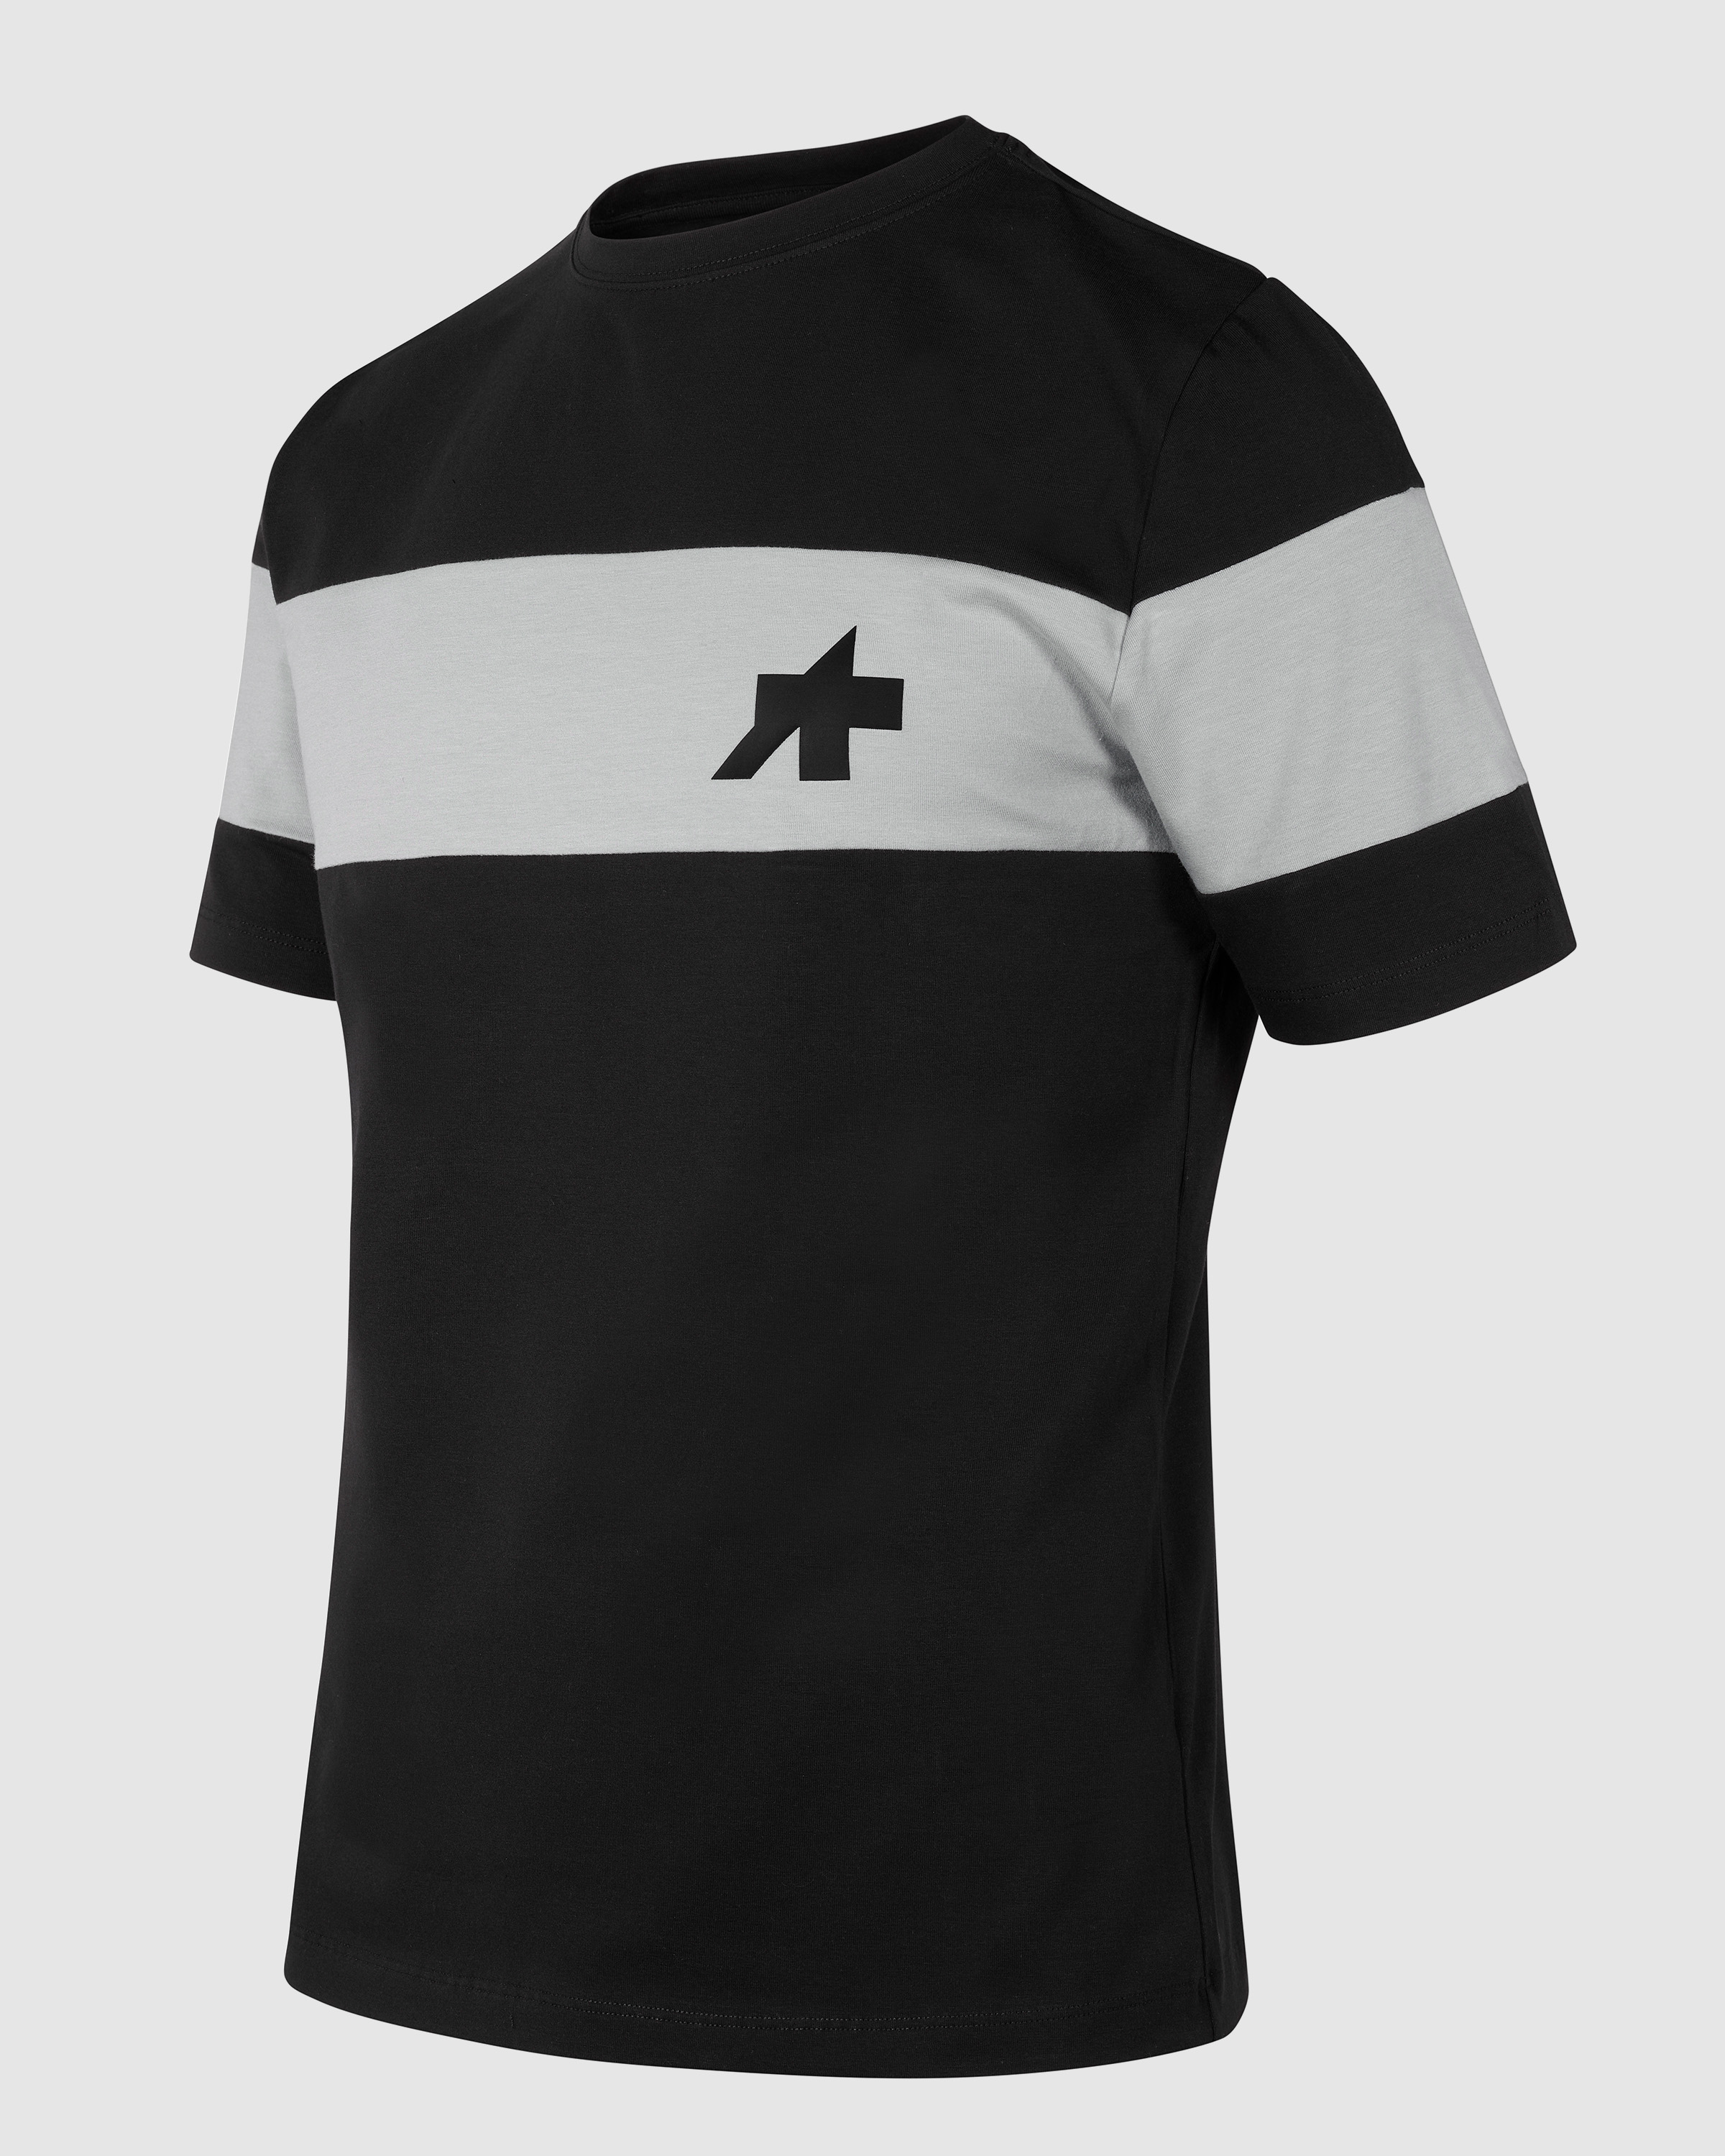 SIGNATURE T-Shirt - ASSOS Of Switzerland - Official Outlet